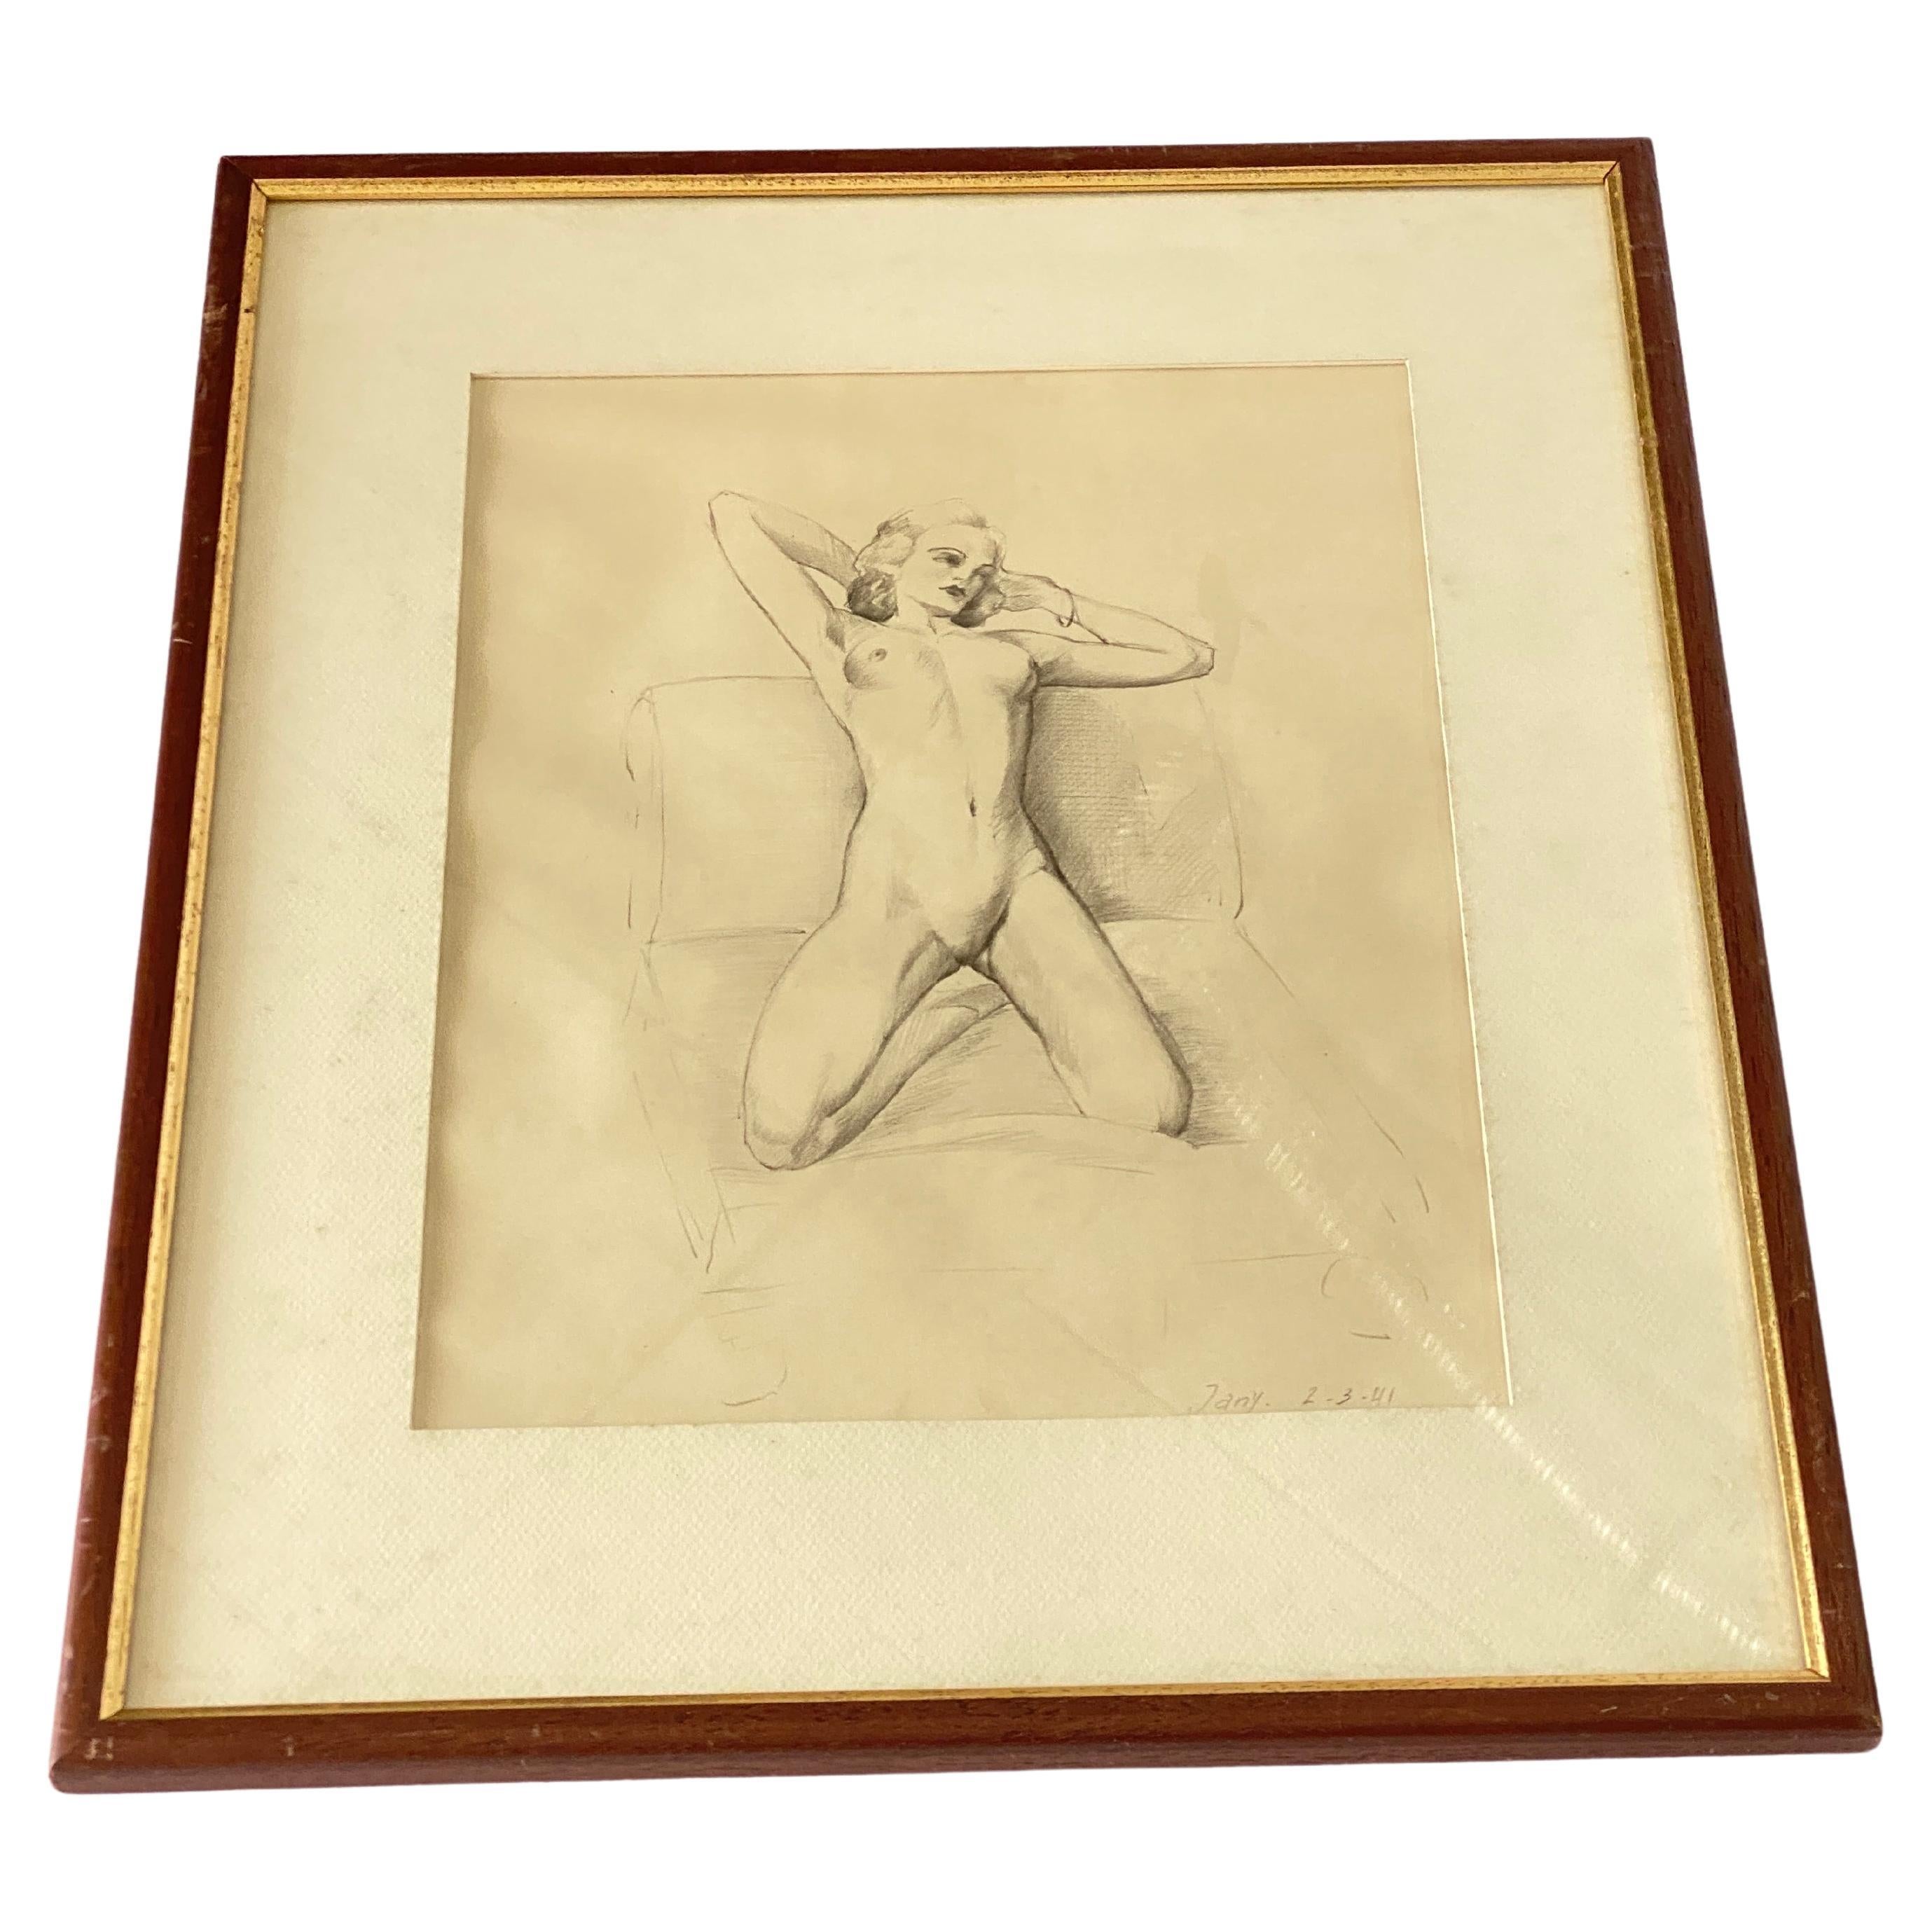  Art Deco Drawing Representing Nude Woman by Van Doren 'Raymond' Belgium 1941